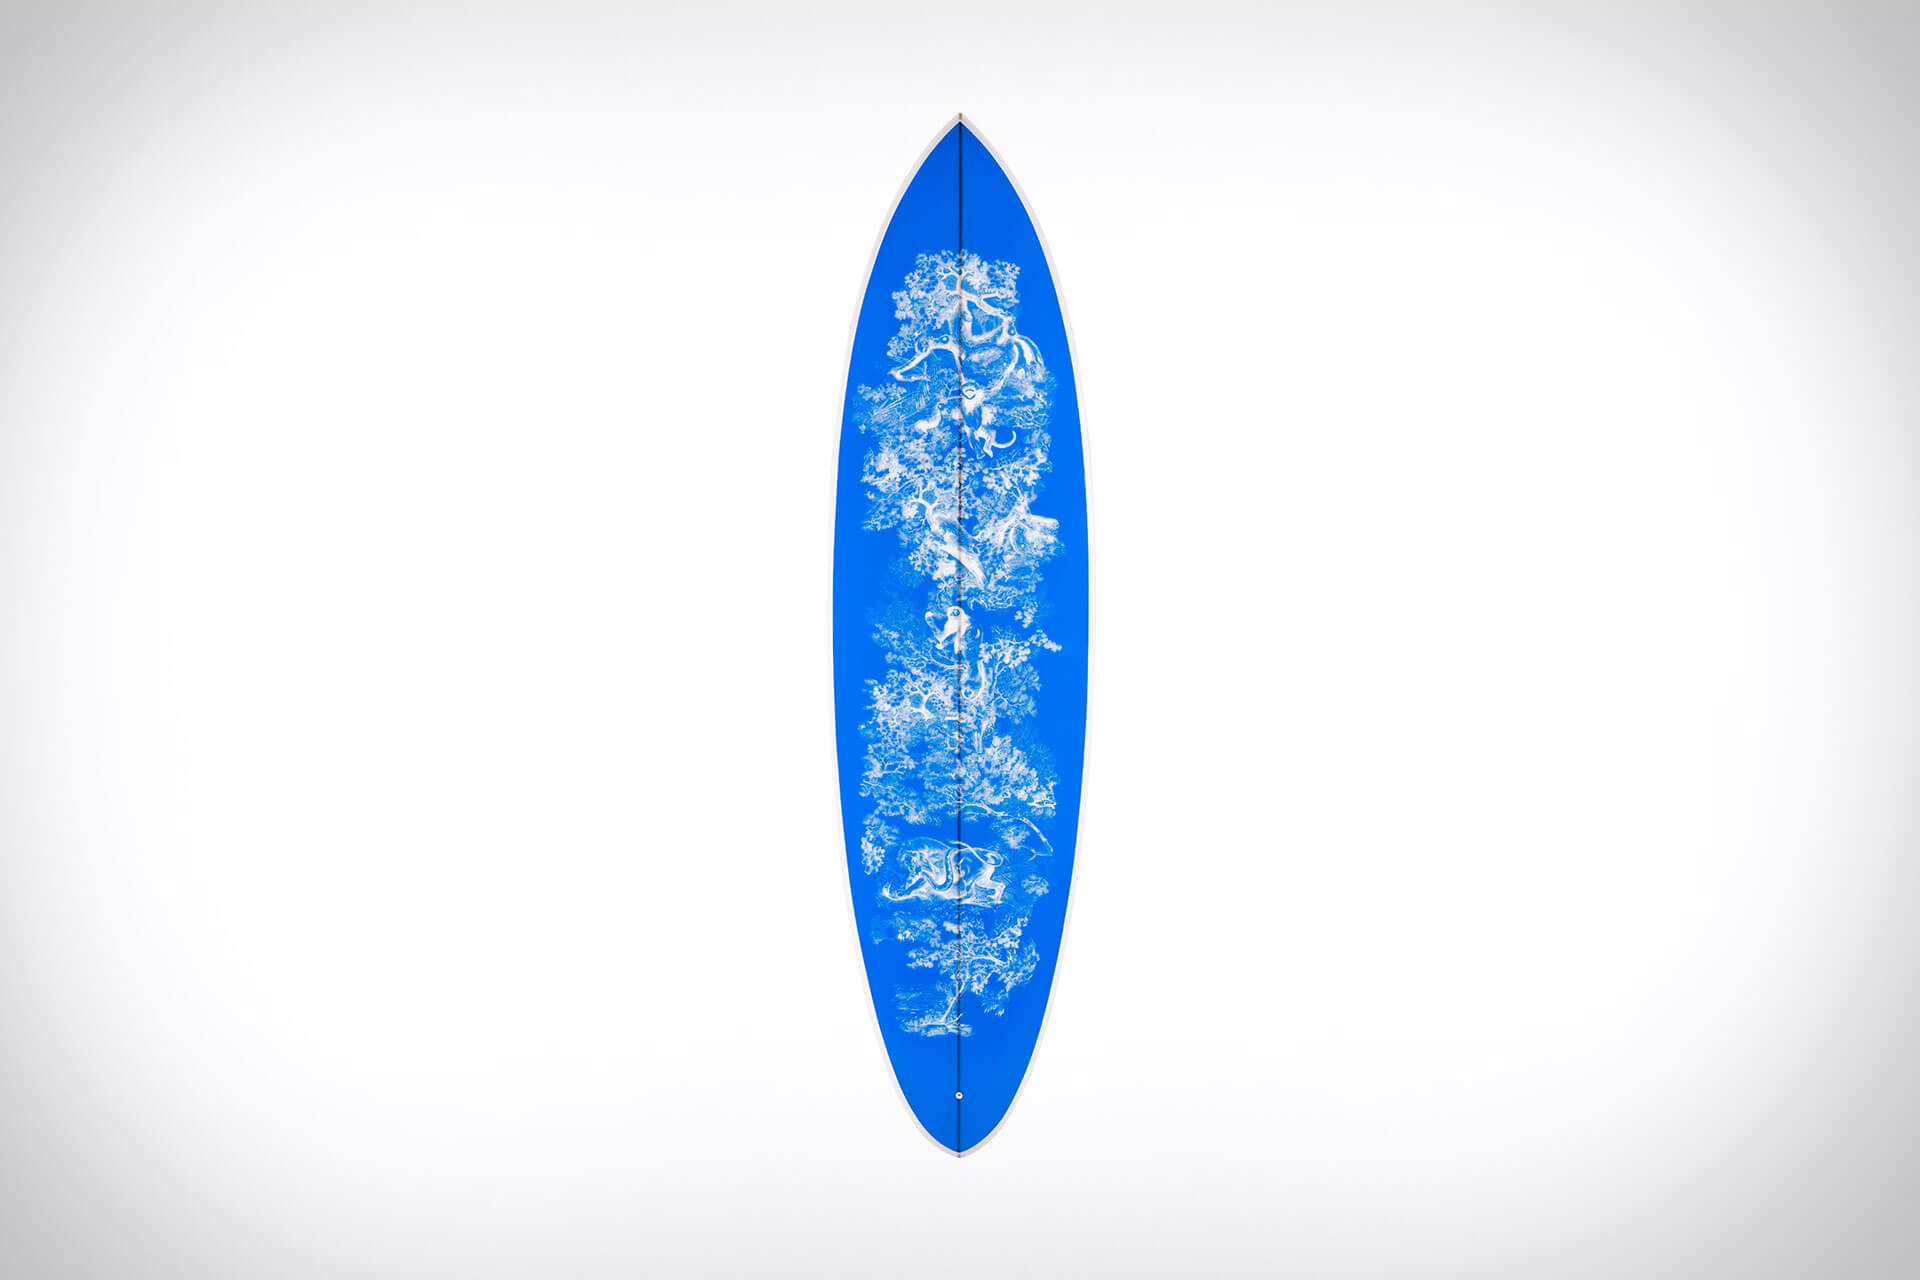 dior surfboard 2 1